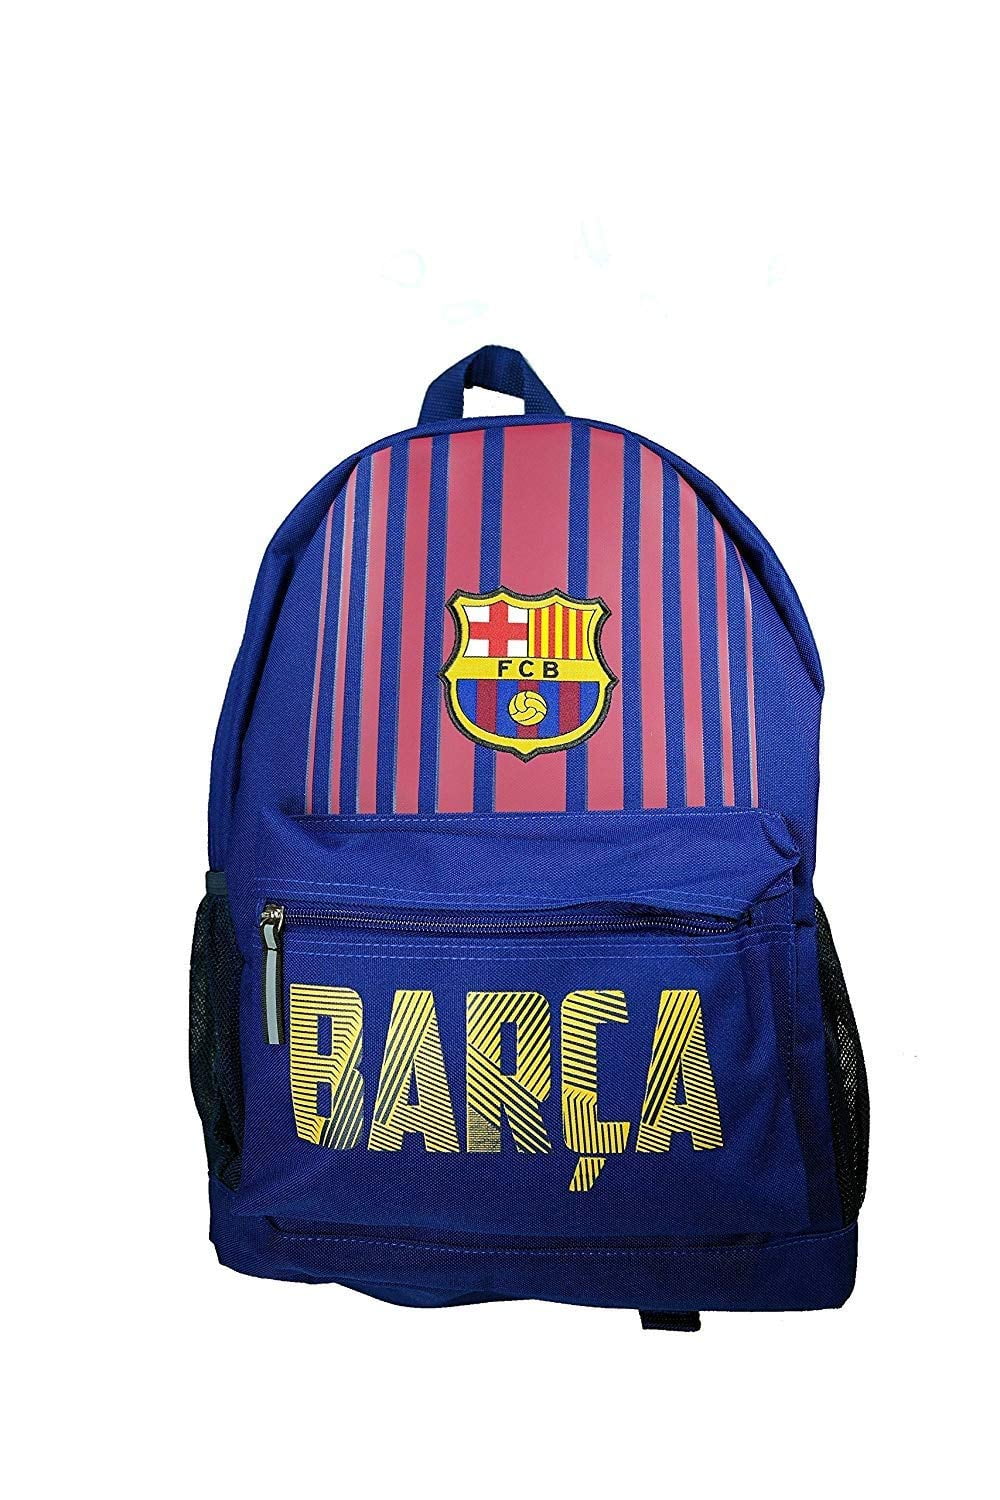 FC Barcelona backpack school mochila bookbag cinch shoe bag official Messi 10 Navy Manchester City 